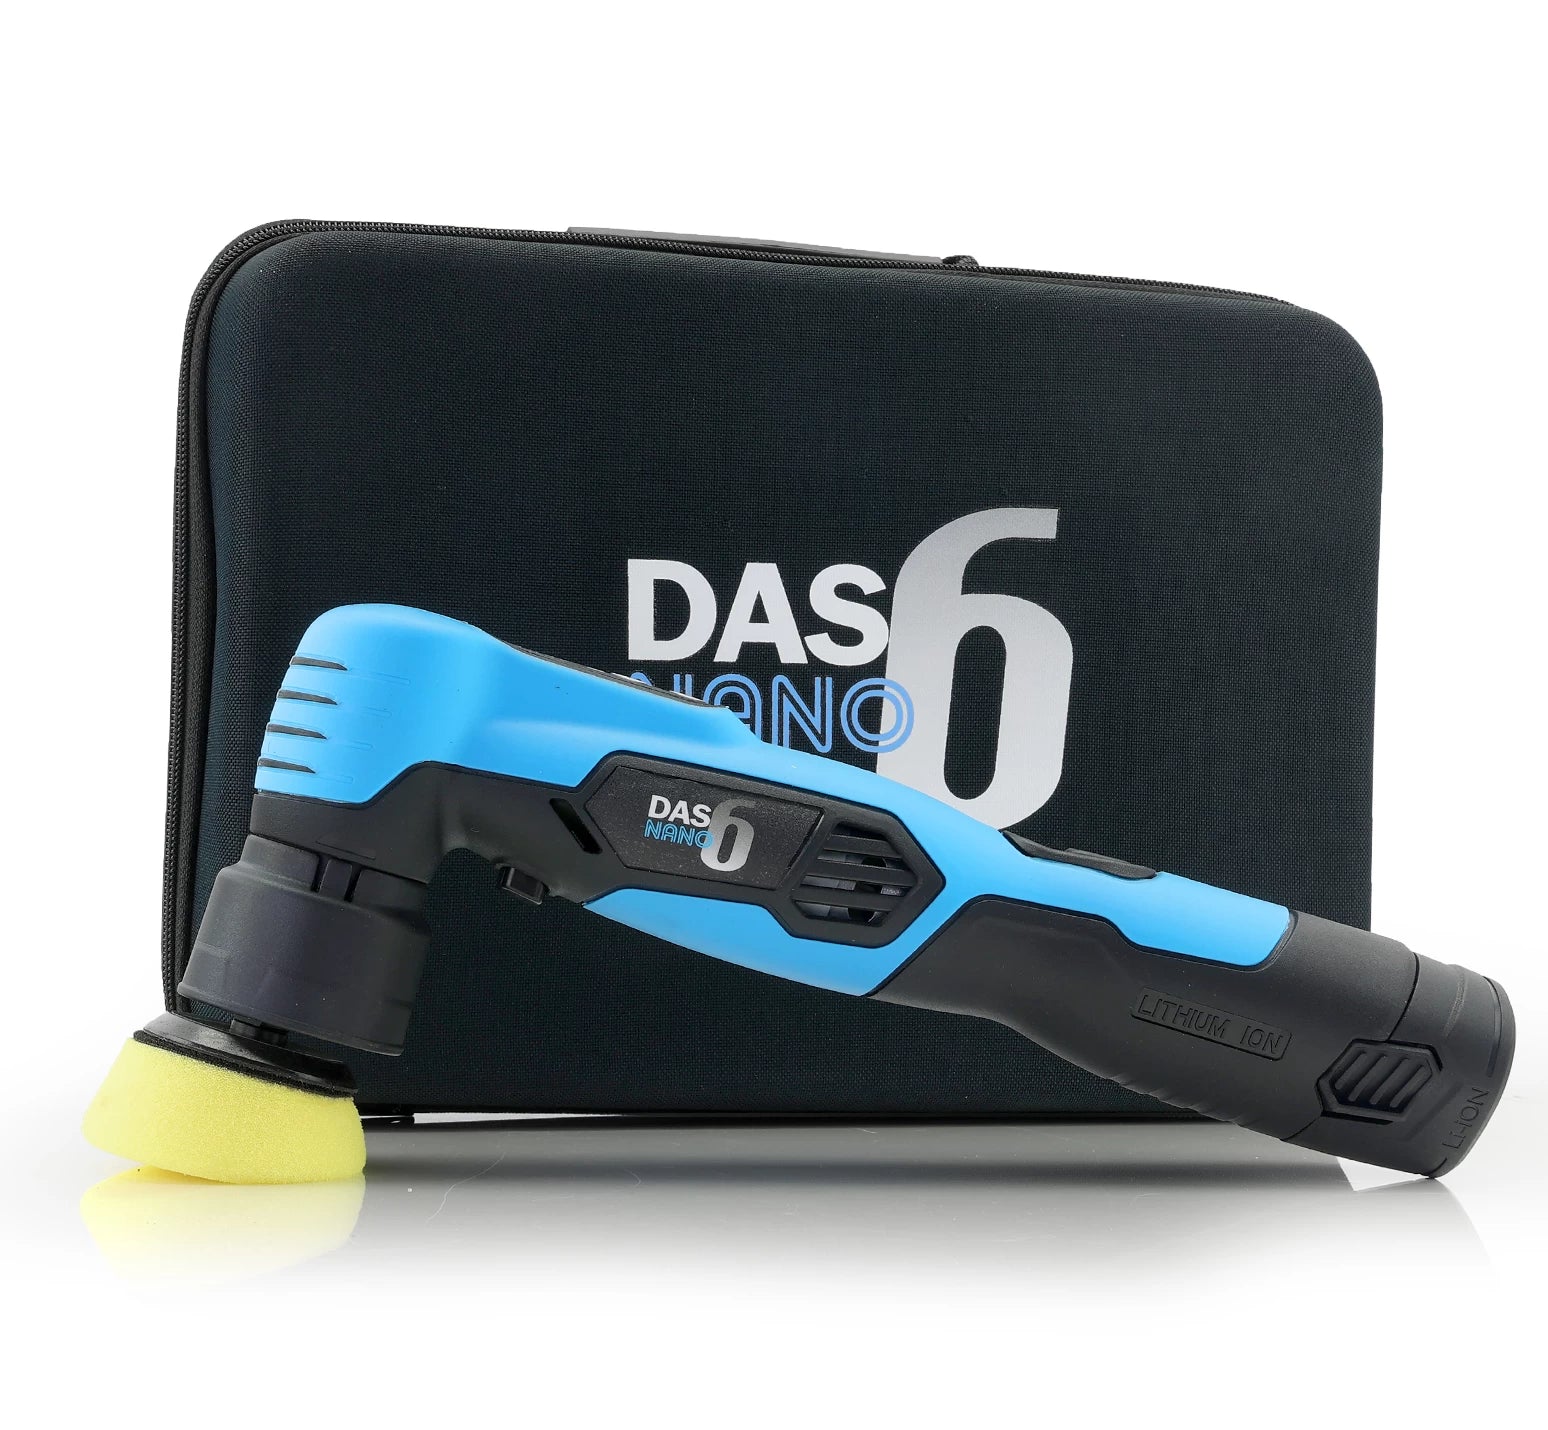 DAS-6 Nano - Cordless Dual Action Polisher